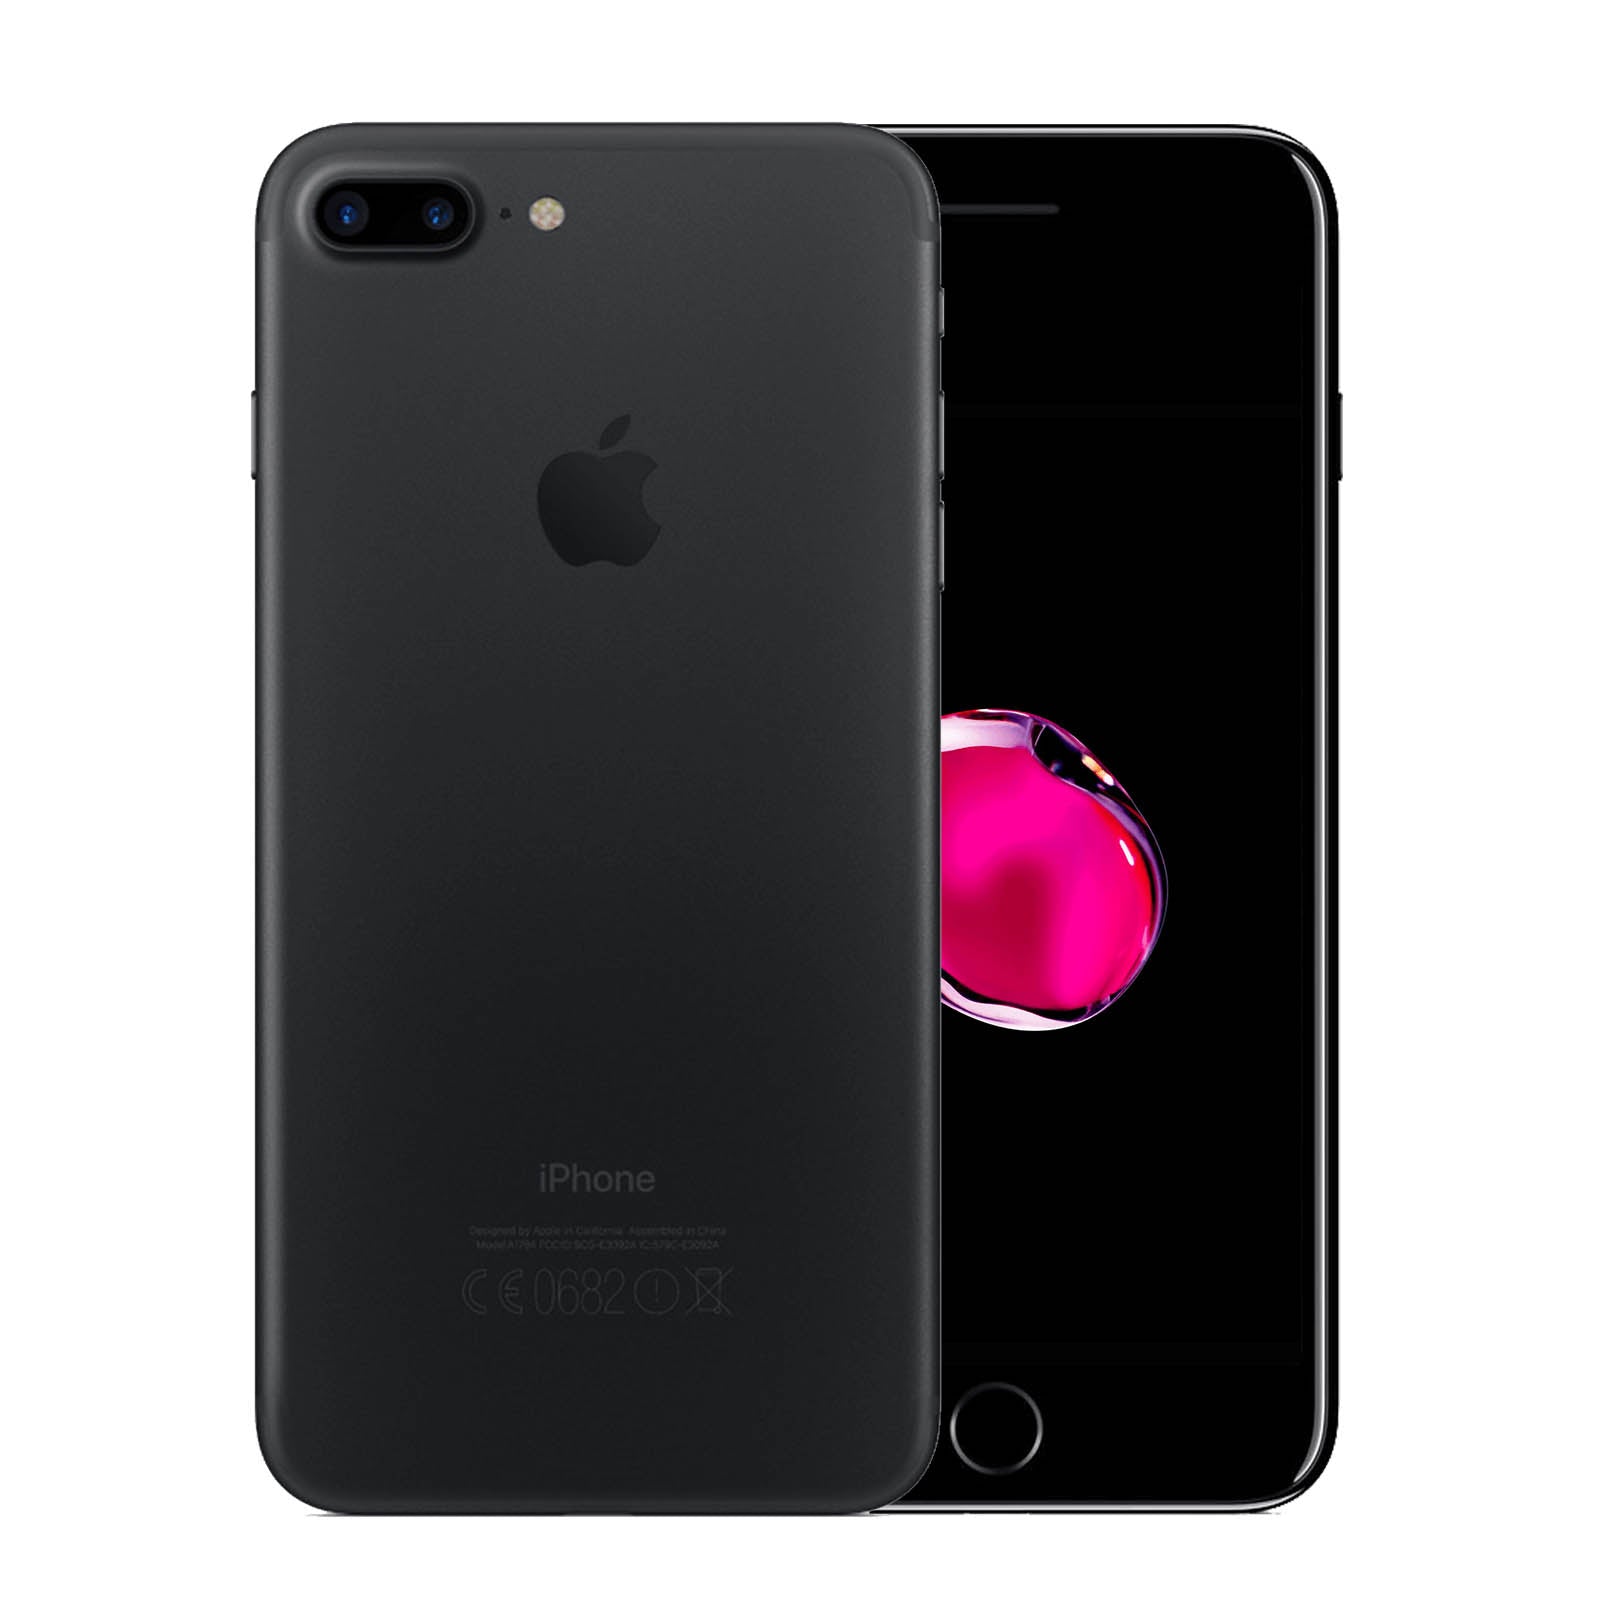 Apple iPhone 7 Plus 32GB Black Pristine - Unlocked